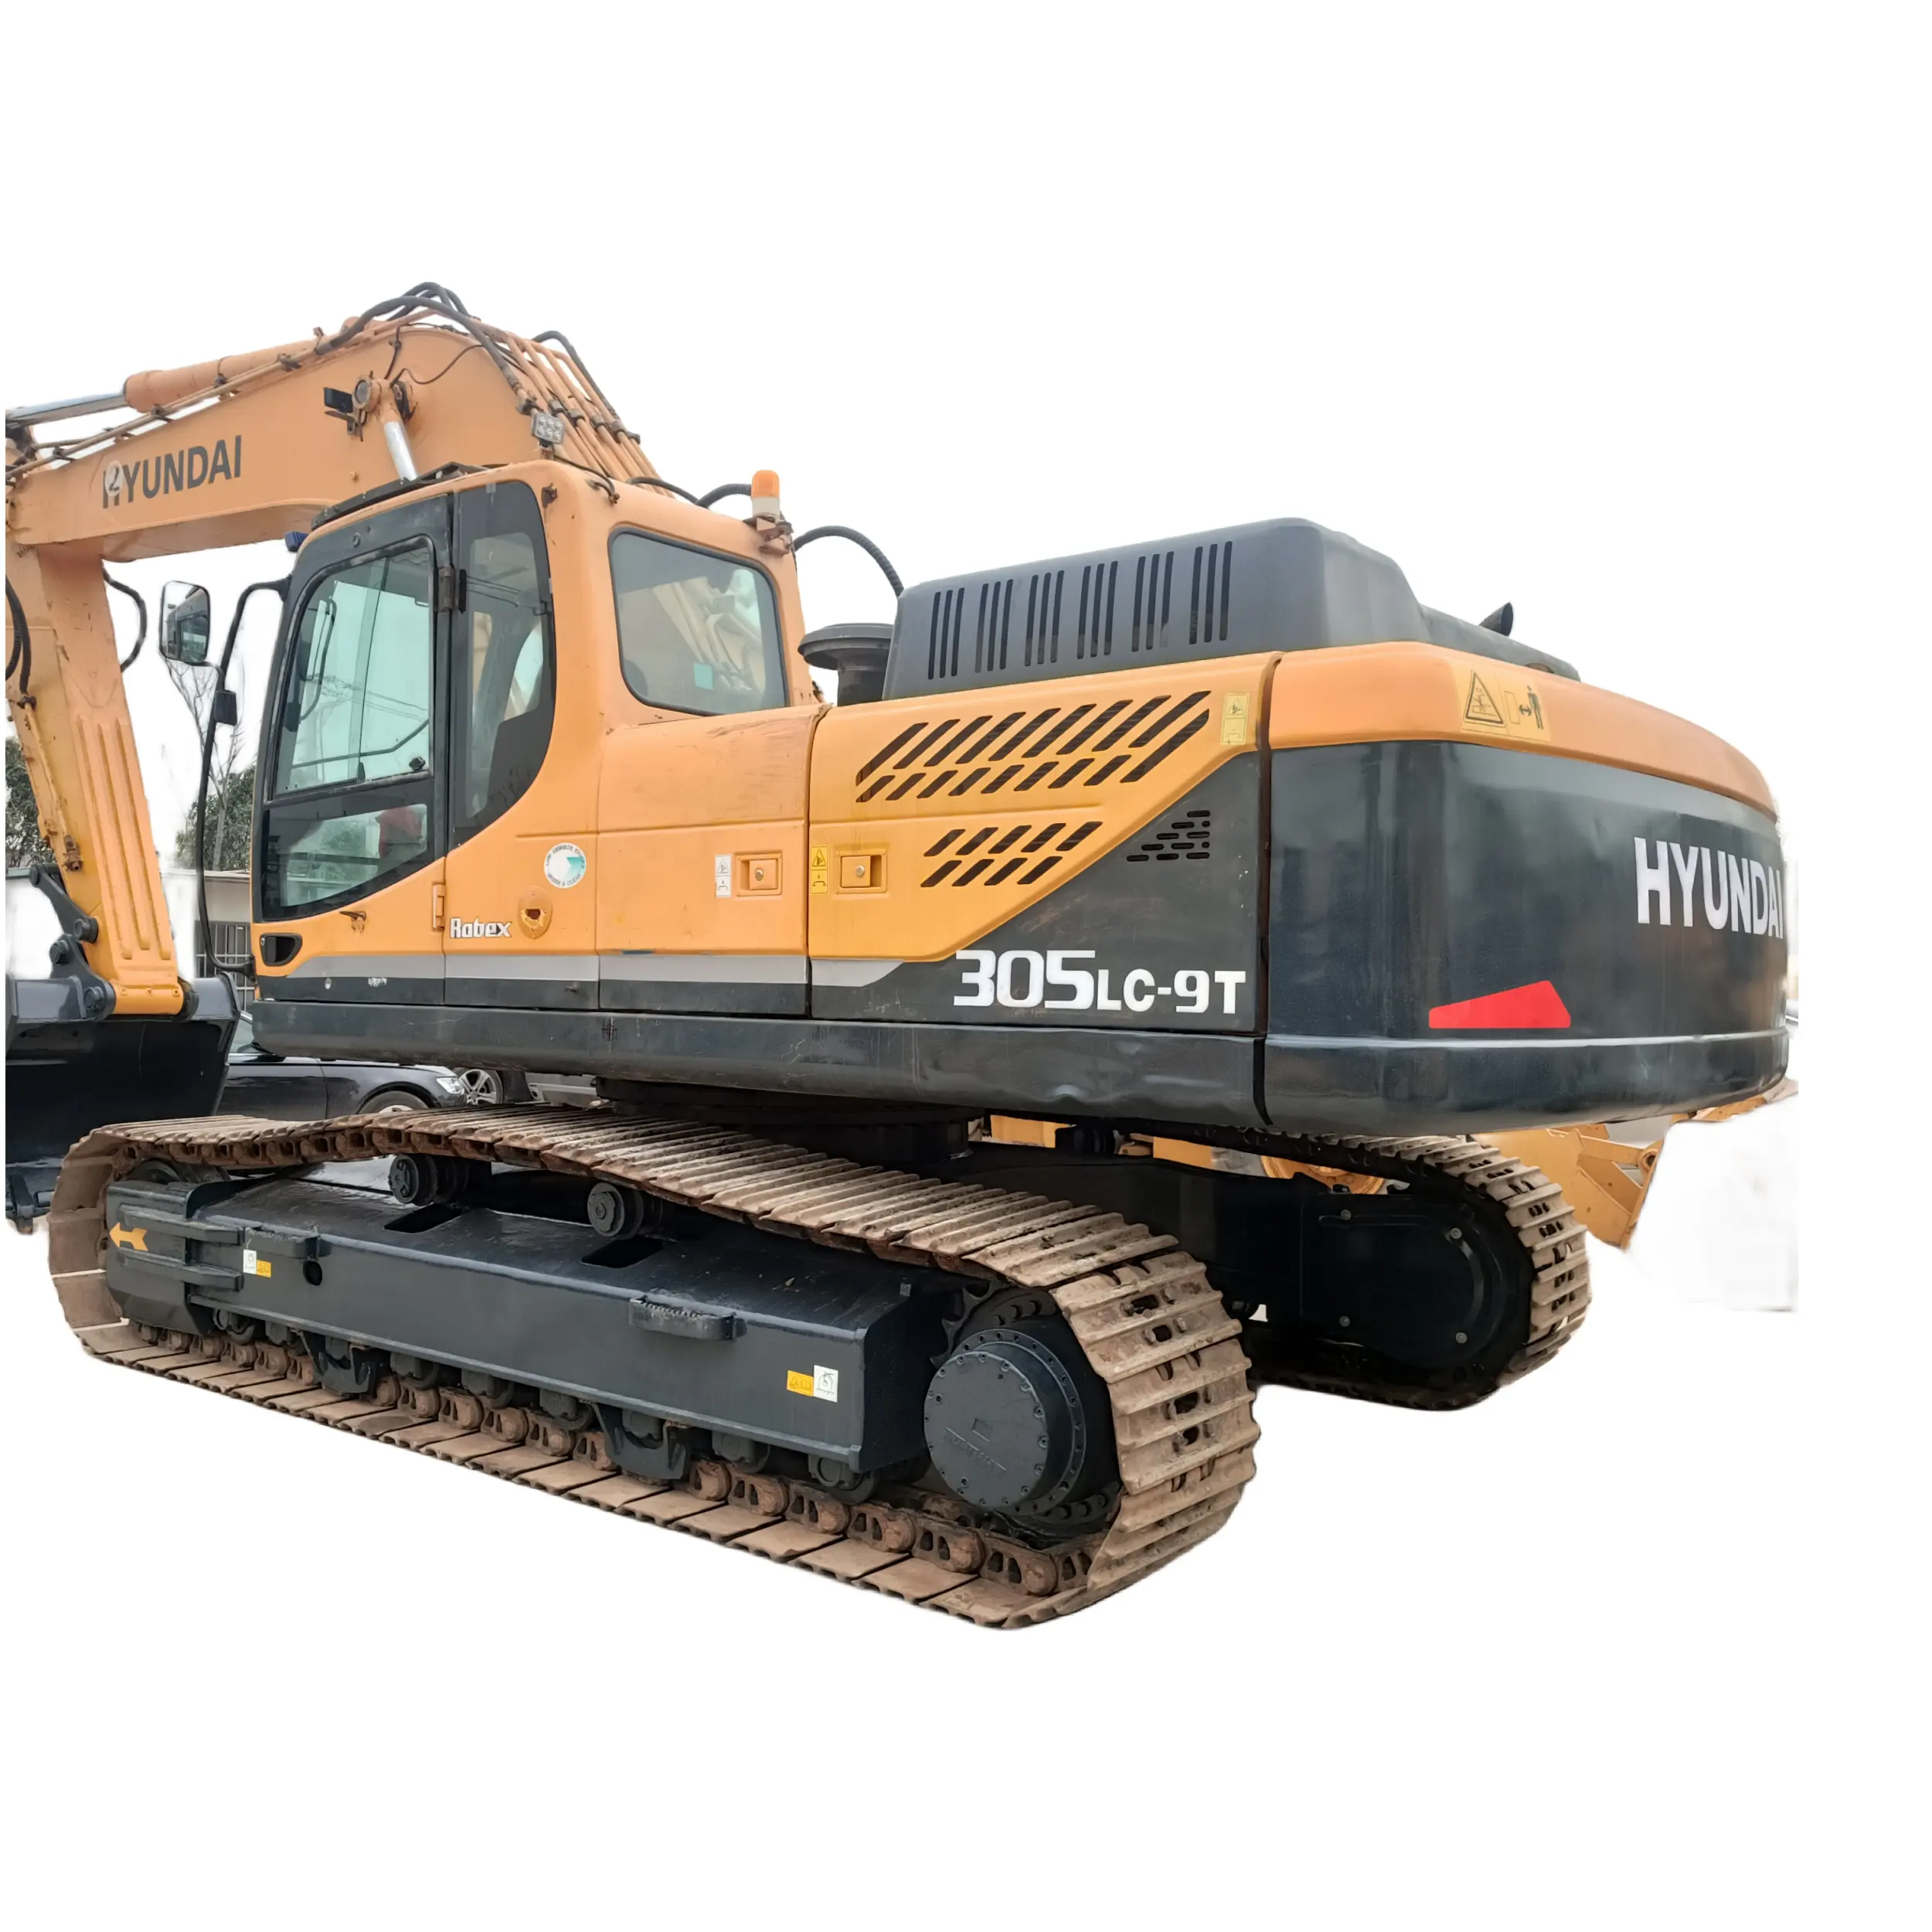 second hand middle excavators used Hyundai excavator 305LC-9T crawler excavator with low price